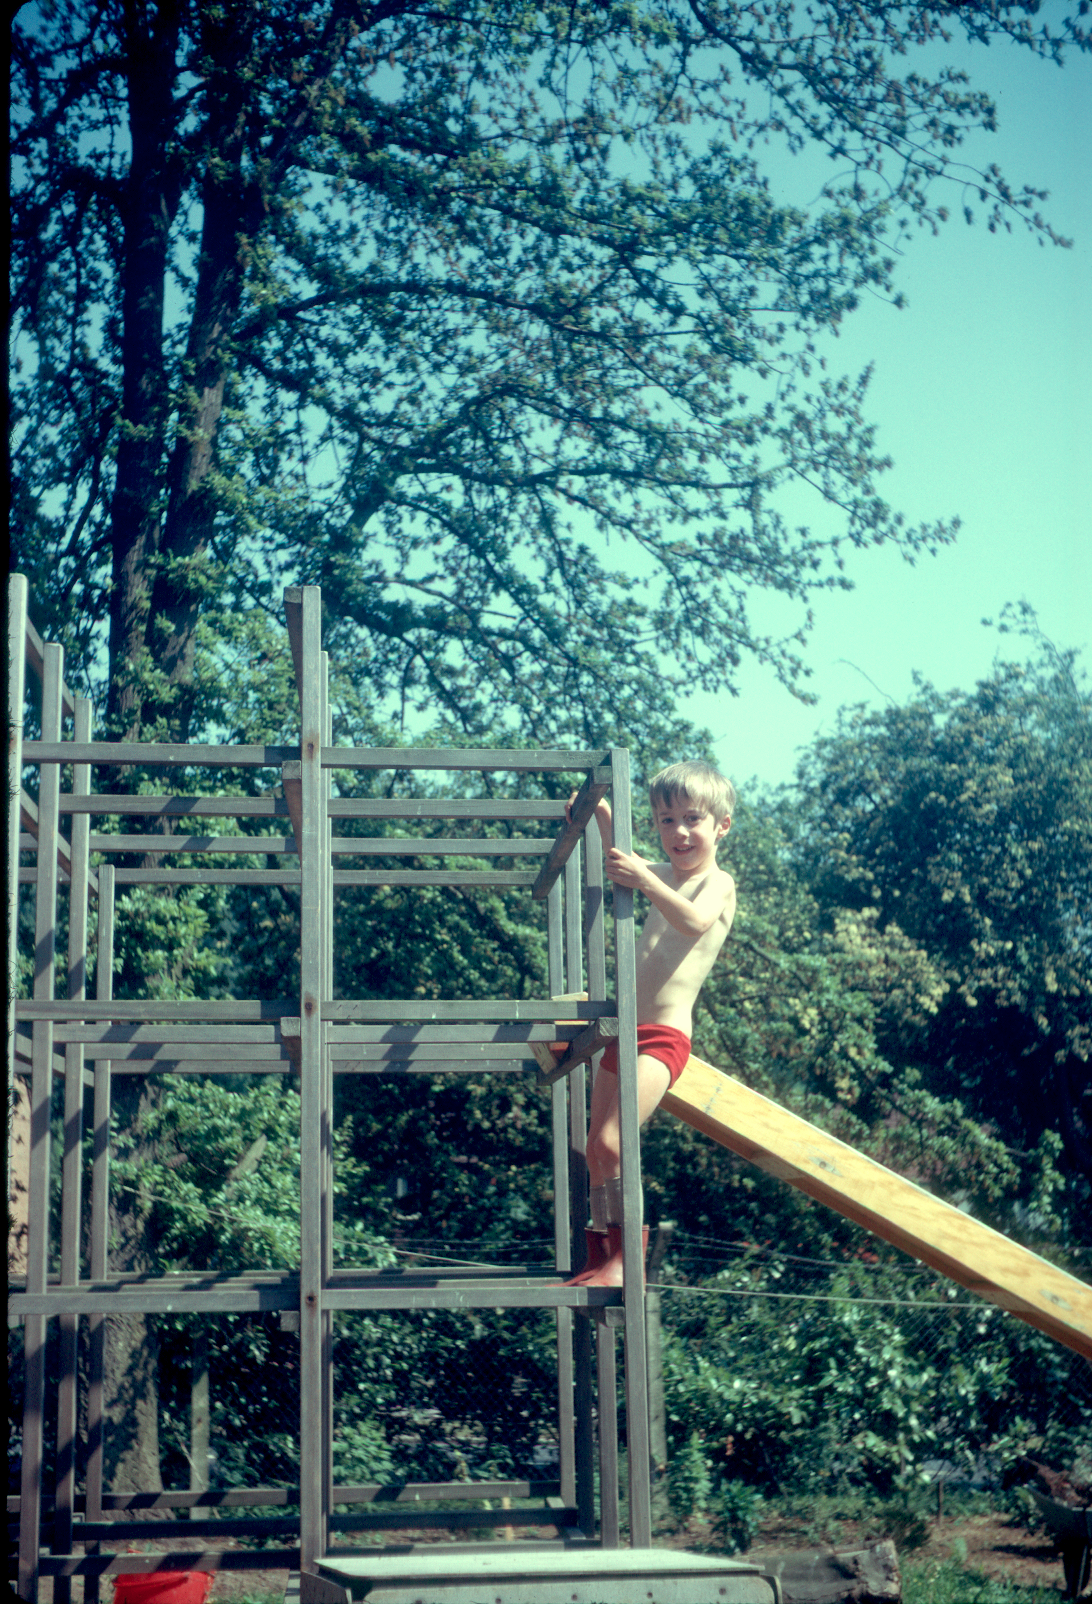 7001925k May 1970 - Jonathan climbing the frame in the garden at Croydon.